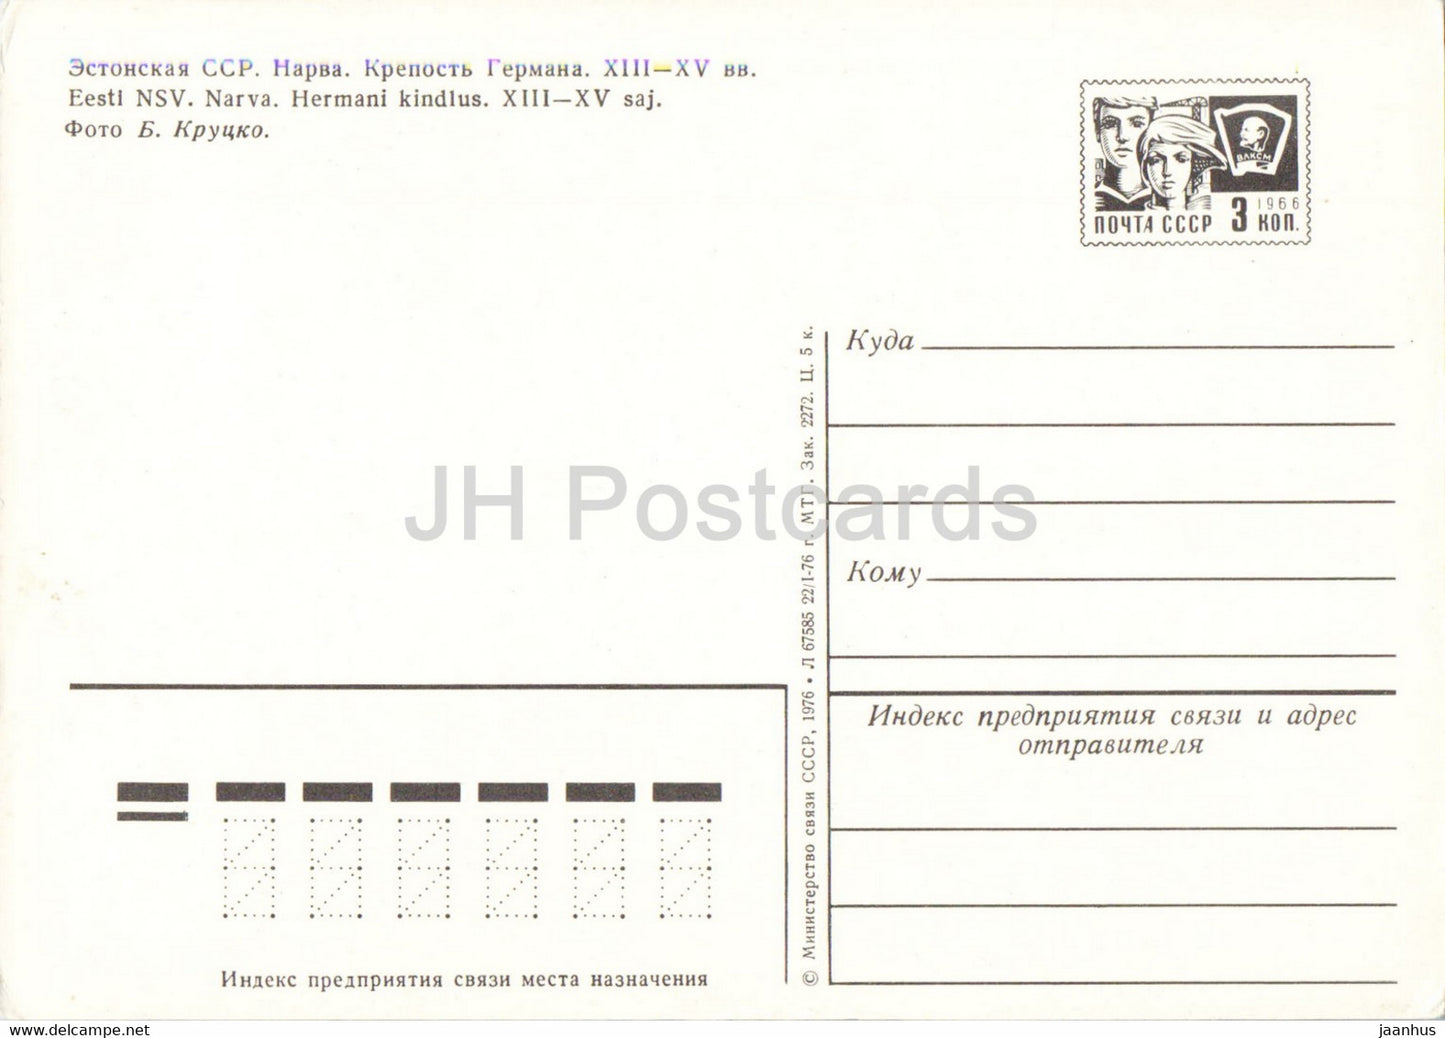 Narva - Château Herman - pont - entier postal - 1976 - Estonie URSS - inutilisé